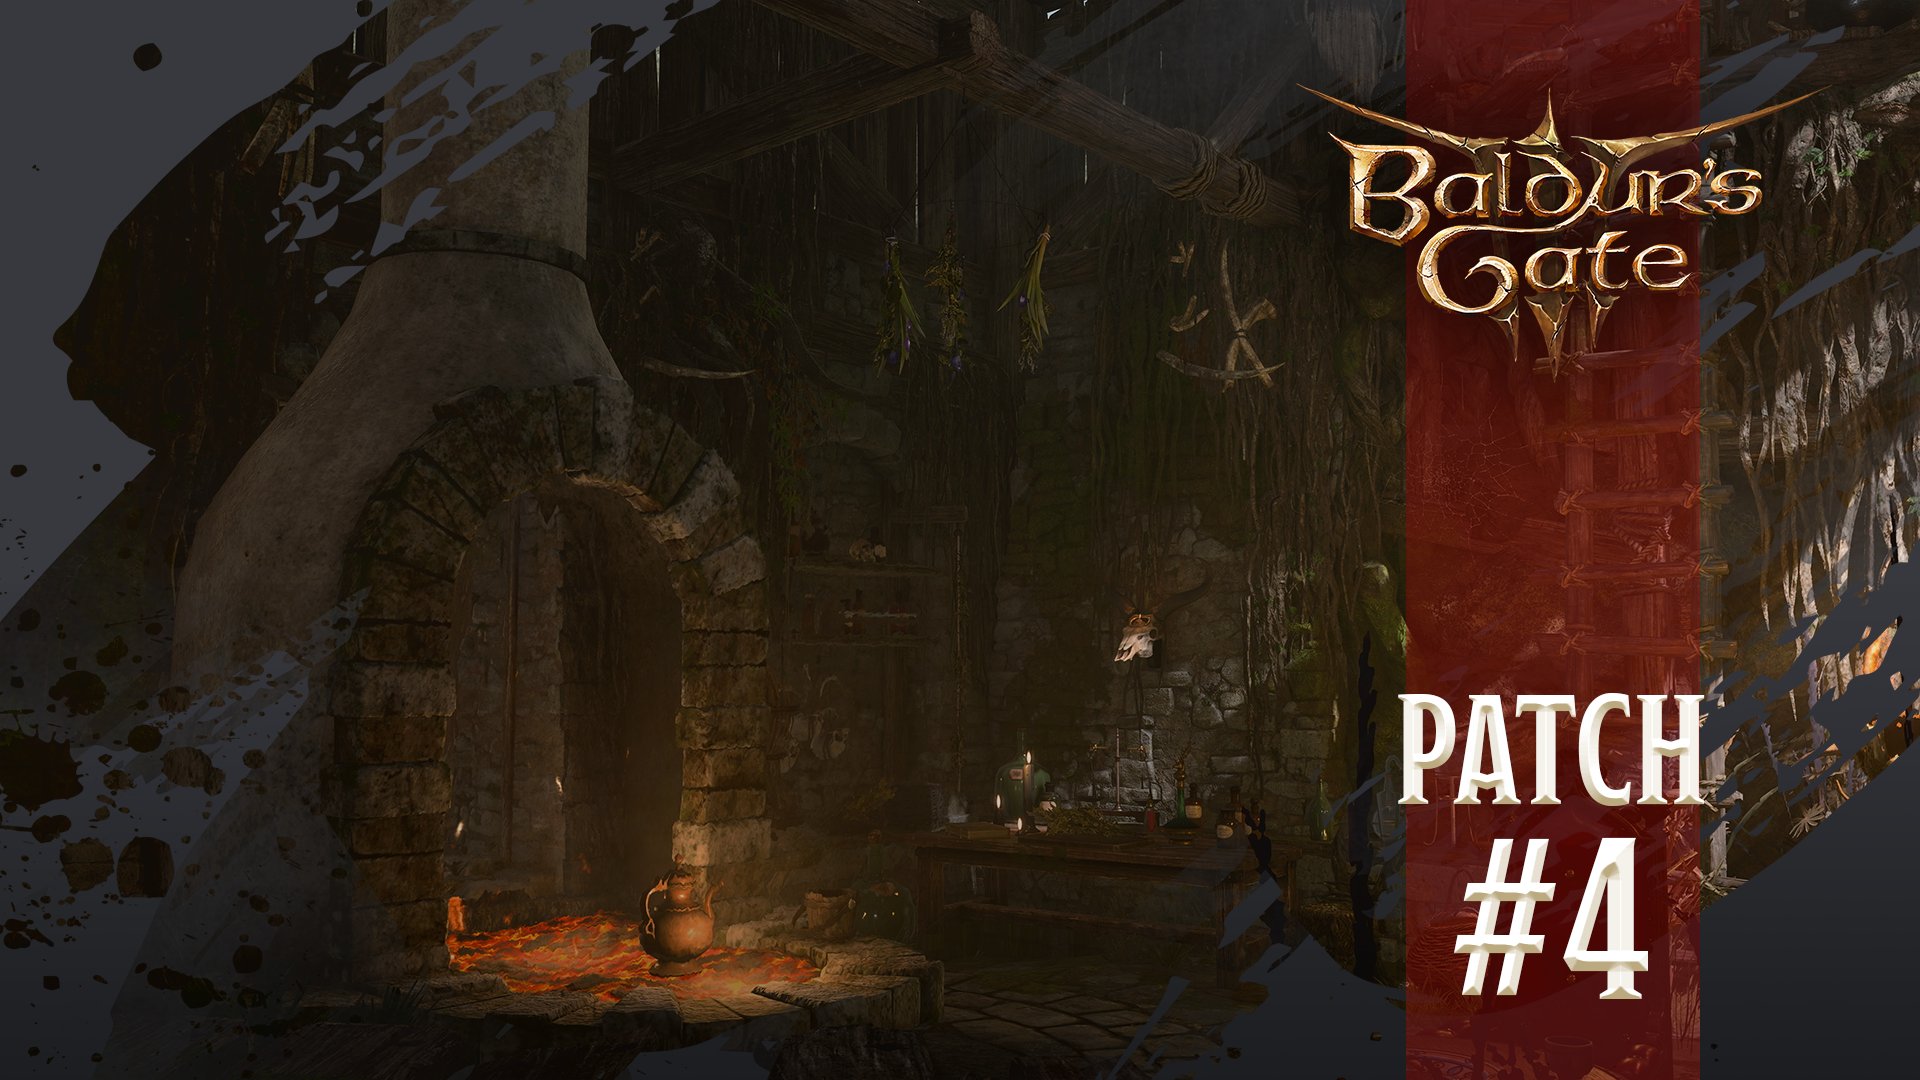 Baldur's Gate 3